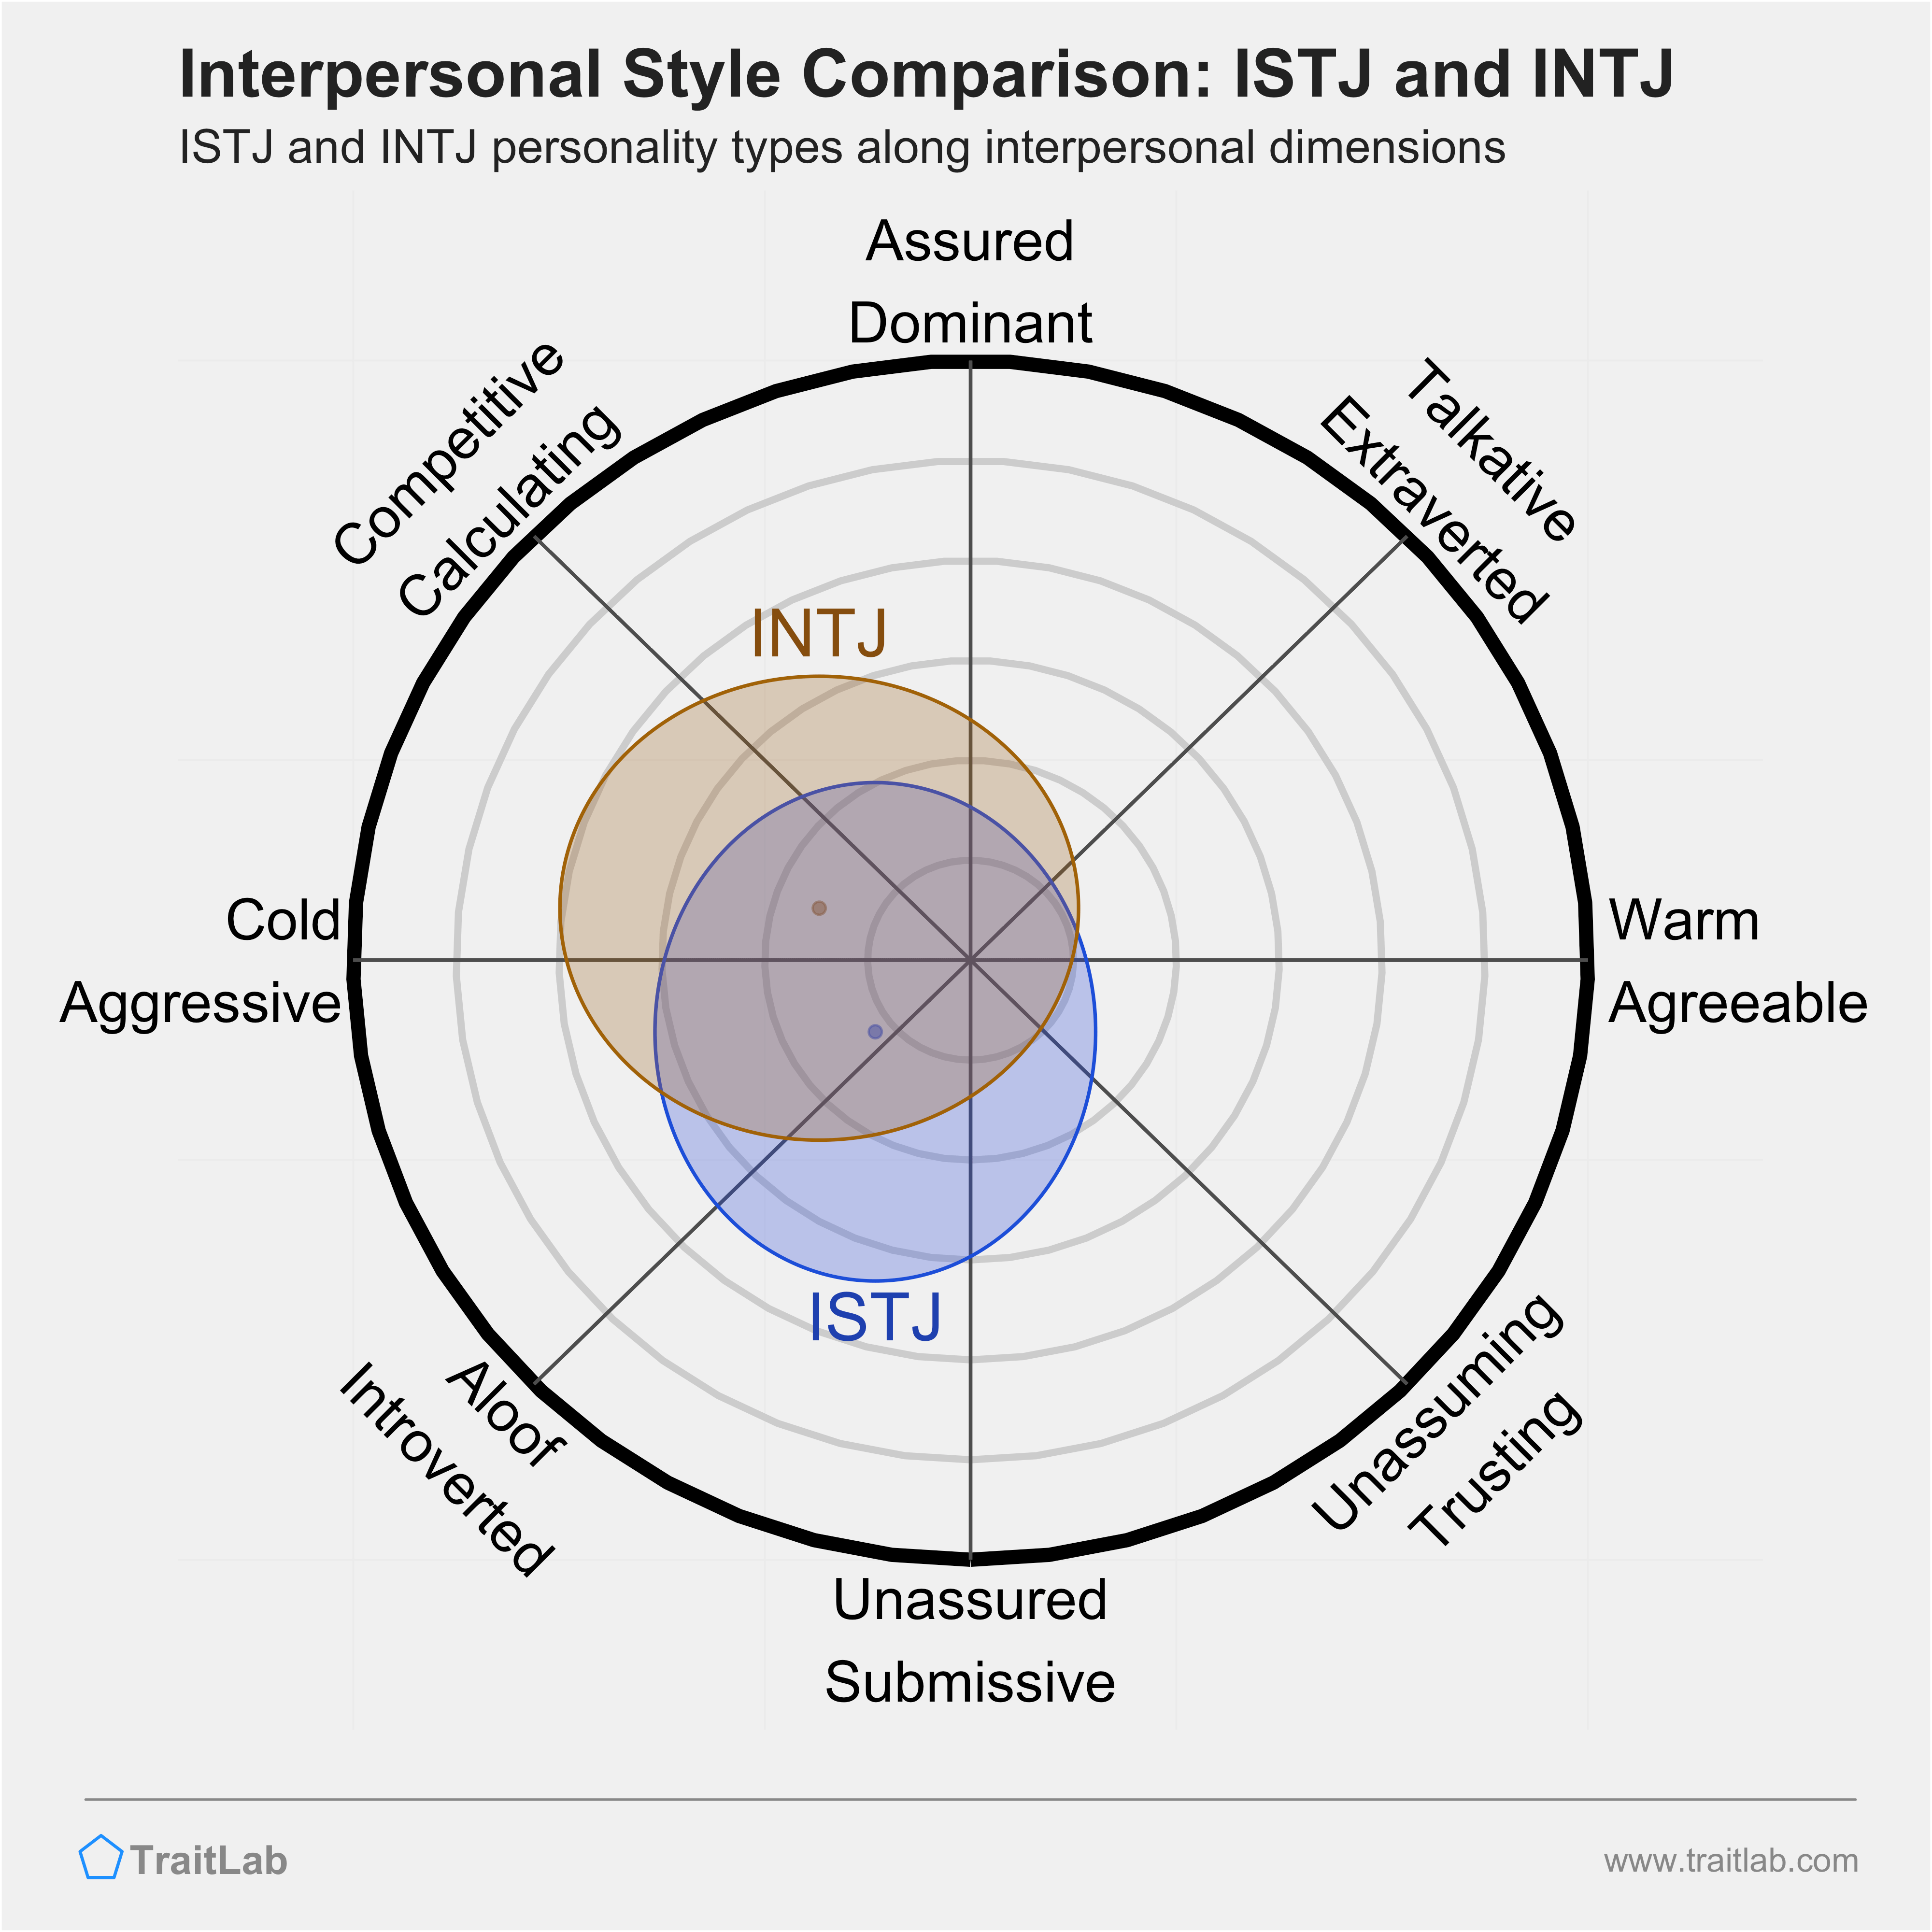 ISTJ and INTJ comparison across interpersonal dimensions